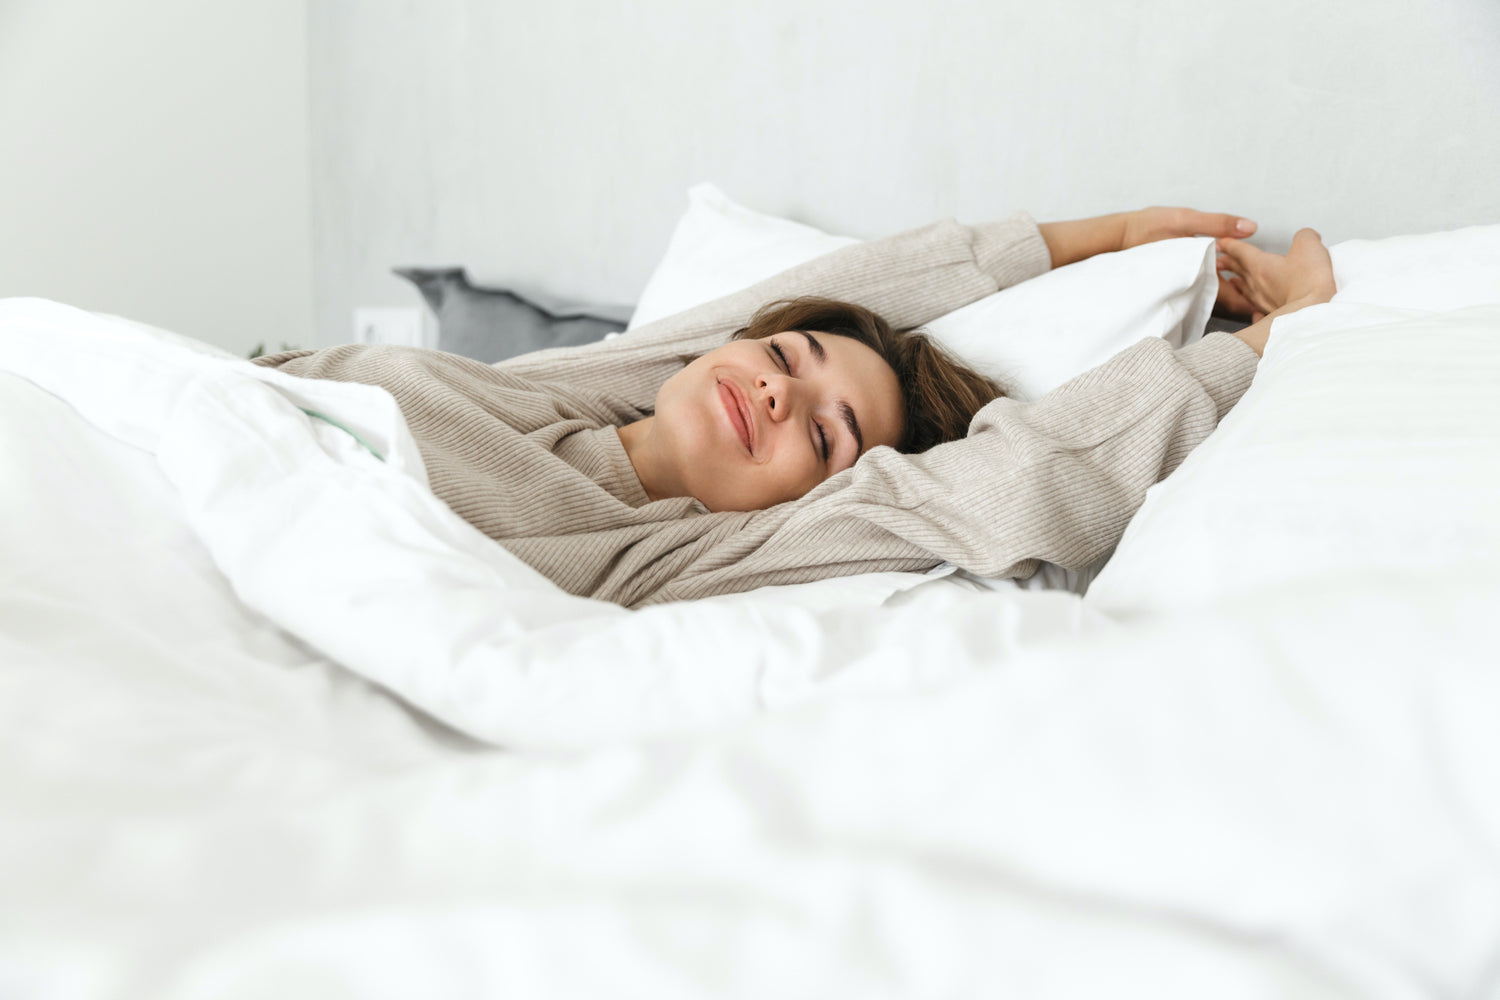 Napping: Health Benefits & Tips